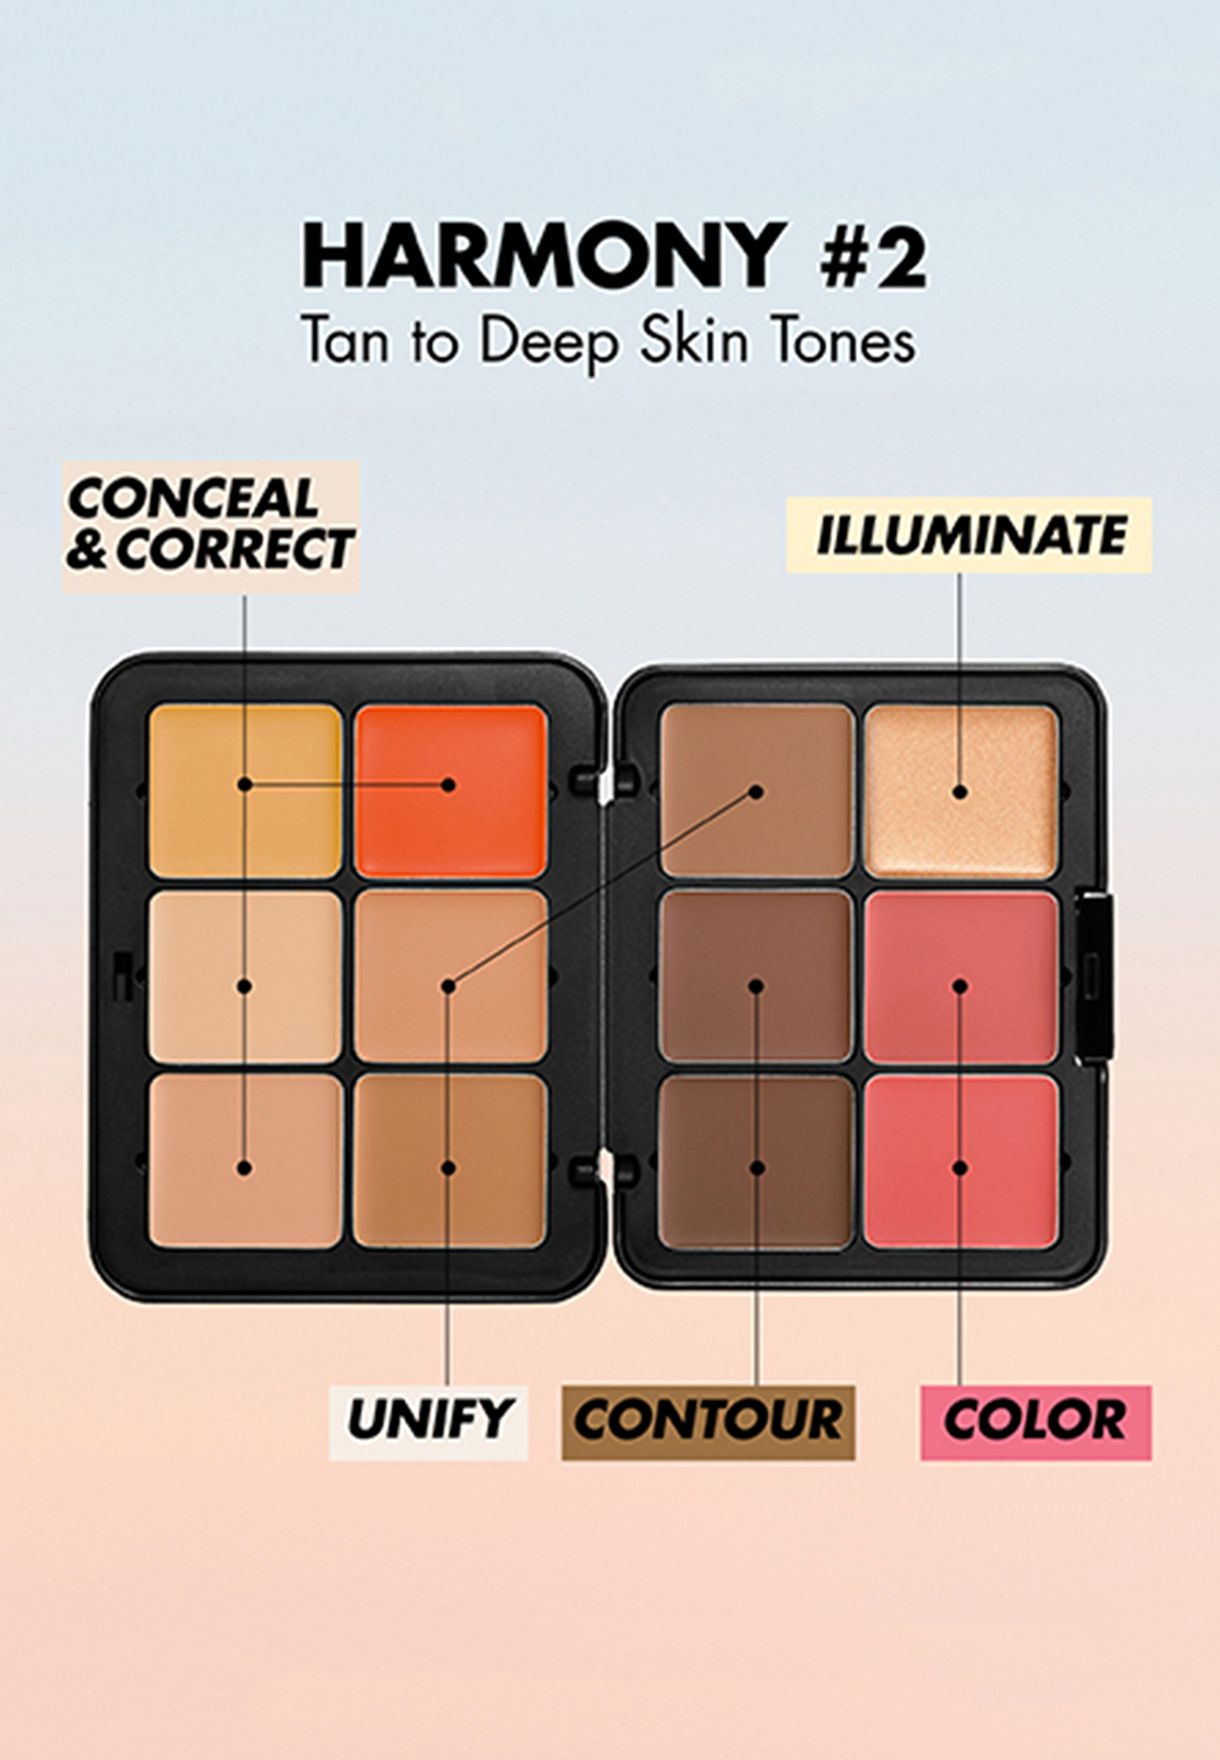 Hd Skin Face Palette - Harmony 2 - Tan to Deep